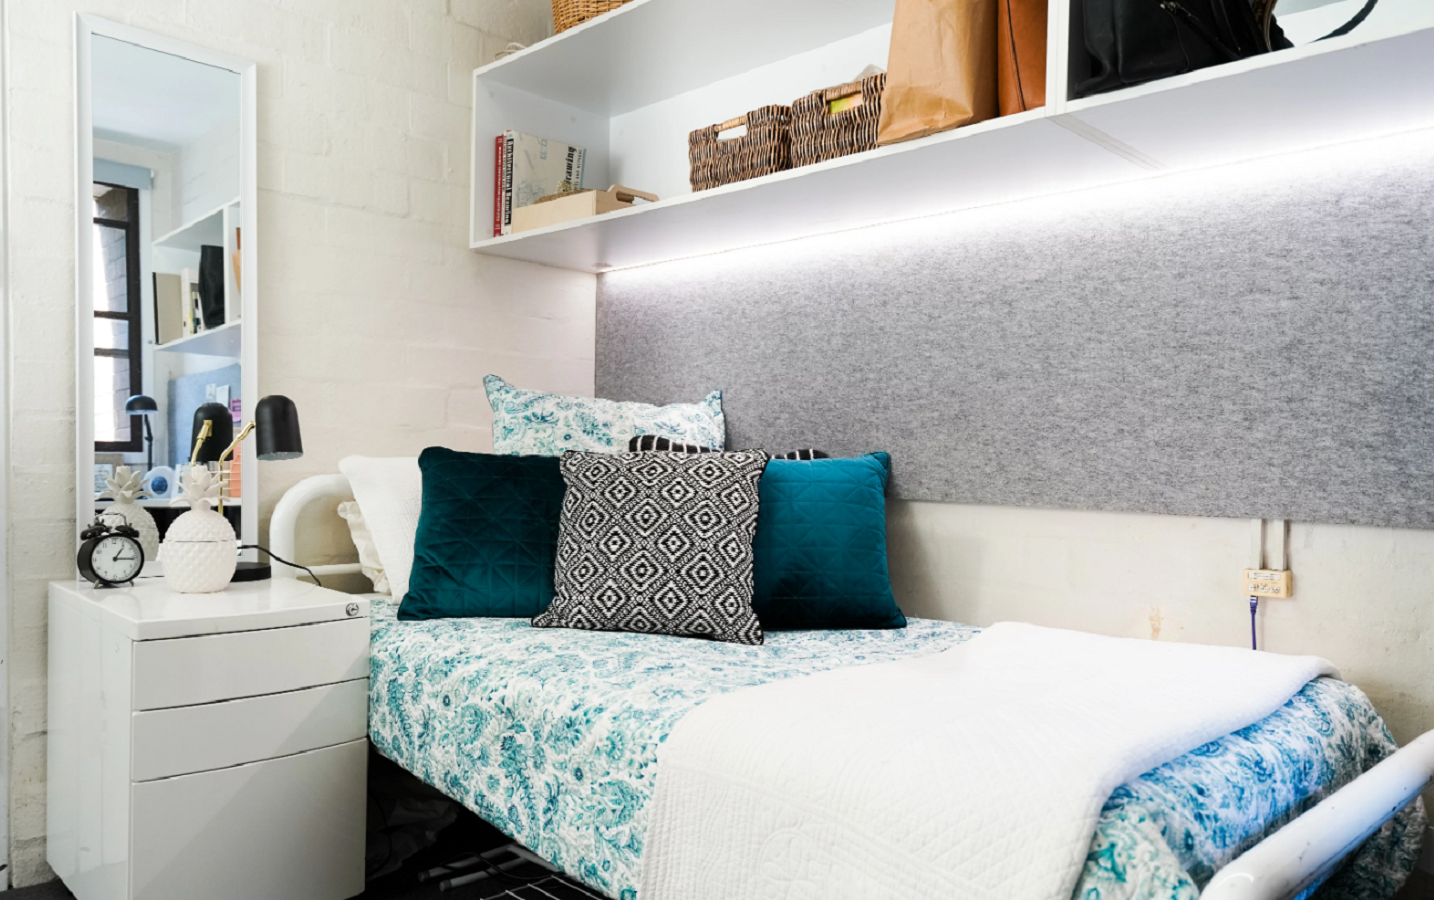 4 Fascinating Guest Bedroom Ideas - Design a Perfect Guest Room